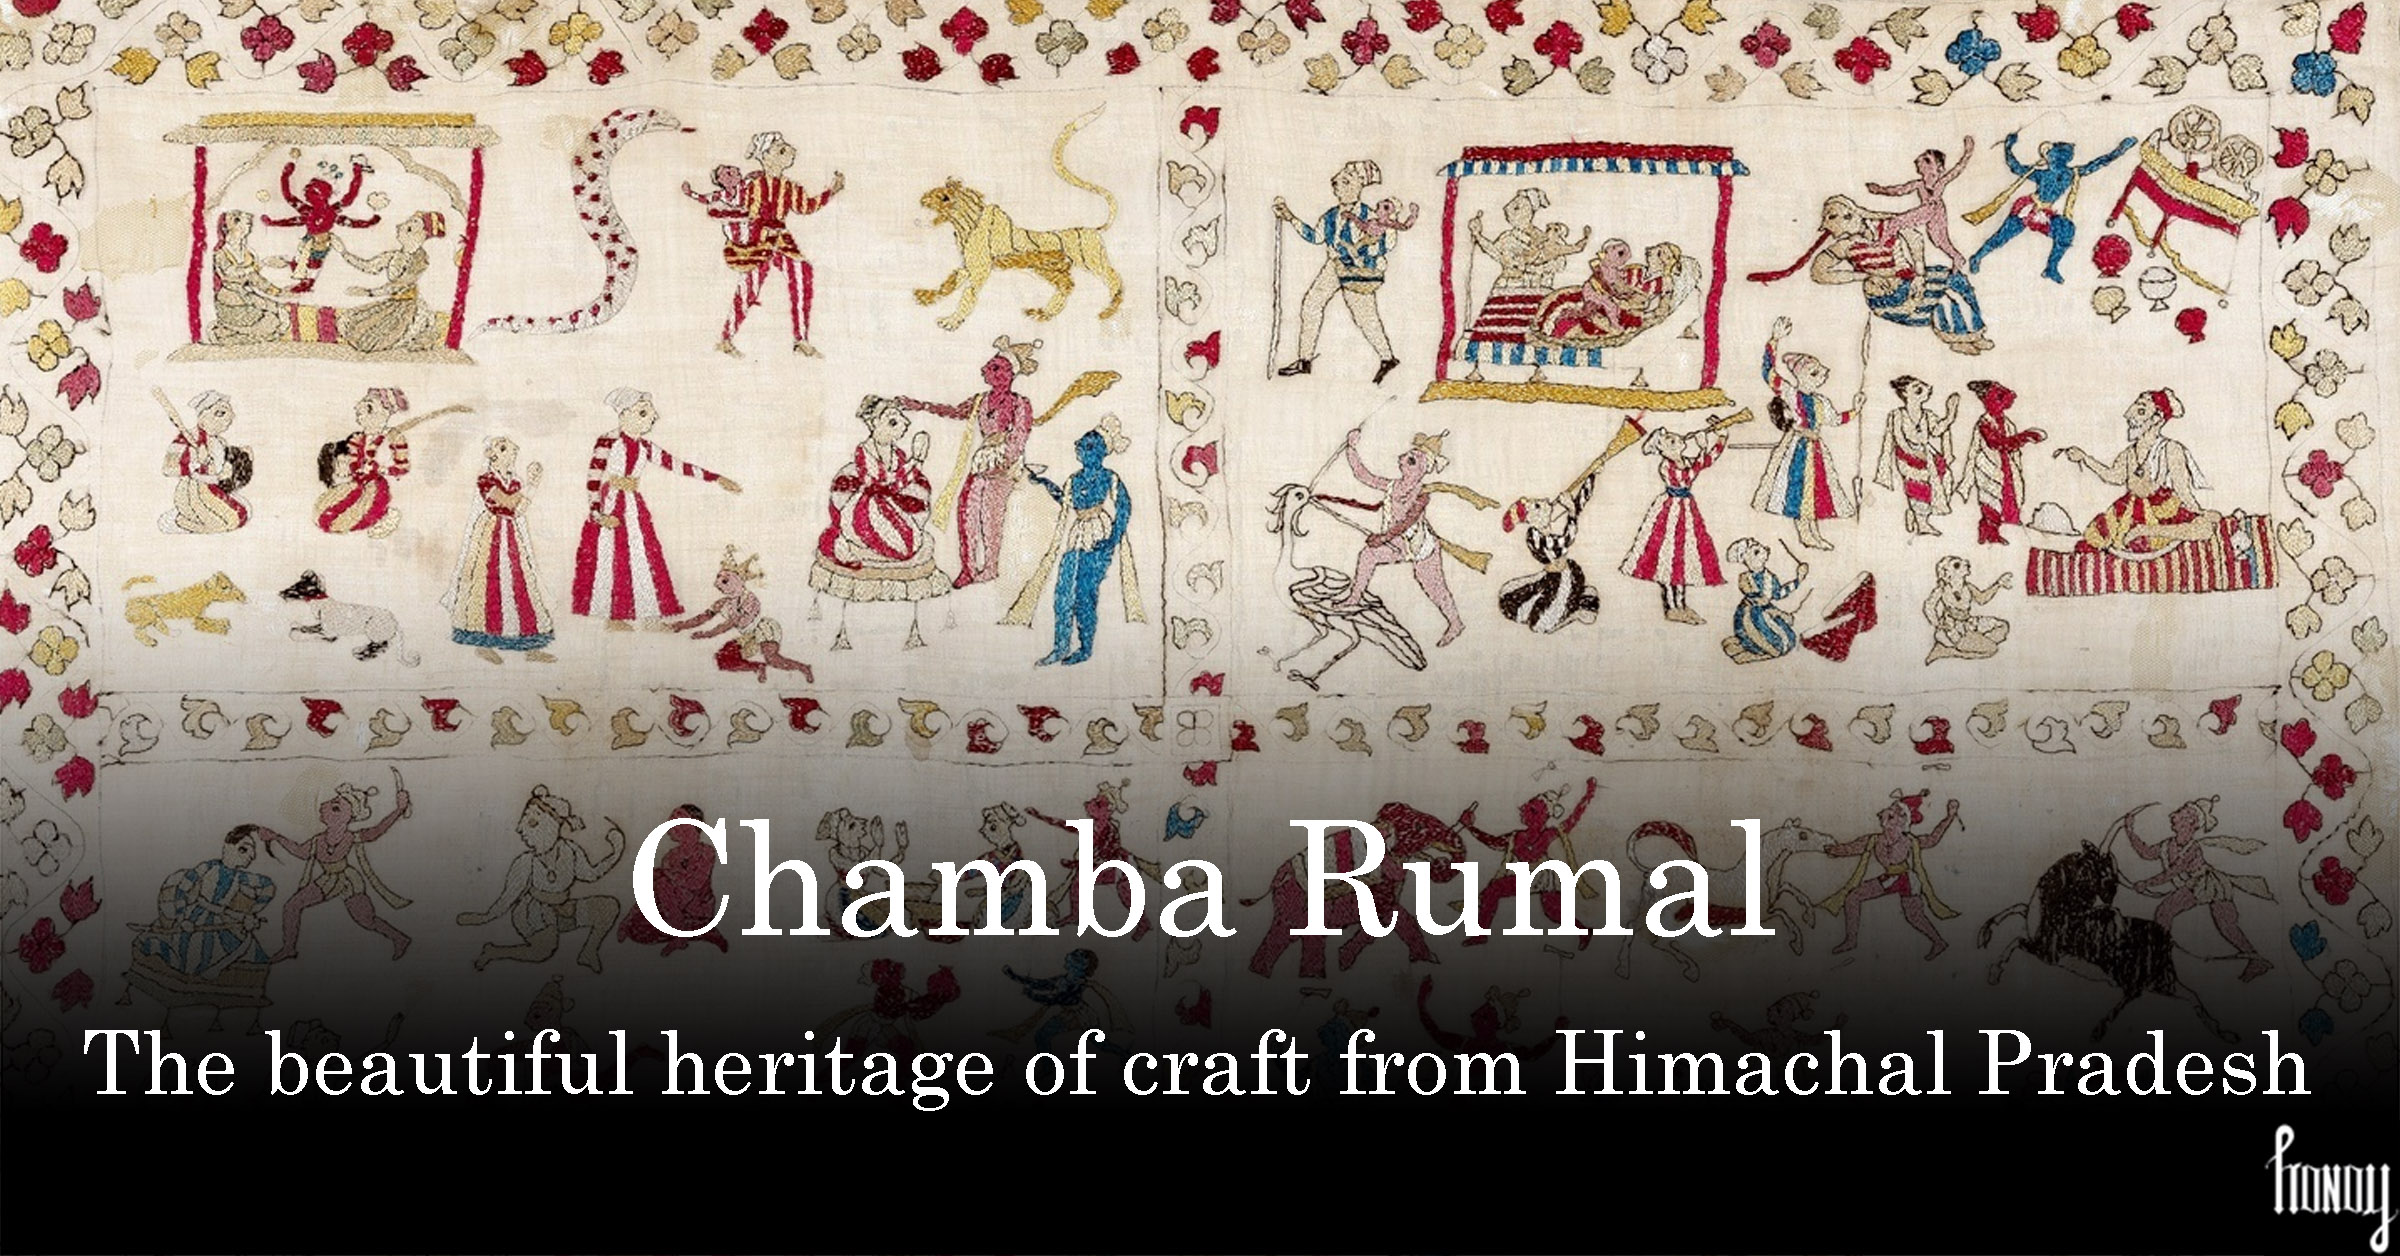 The beautiful heritage of Chamba Rumal from Himachal Pradesh